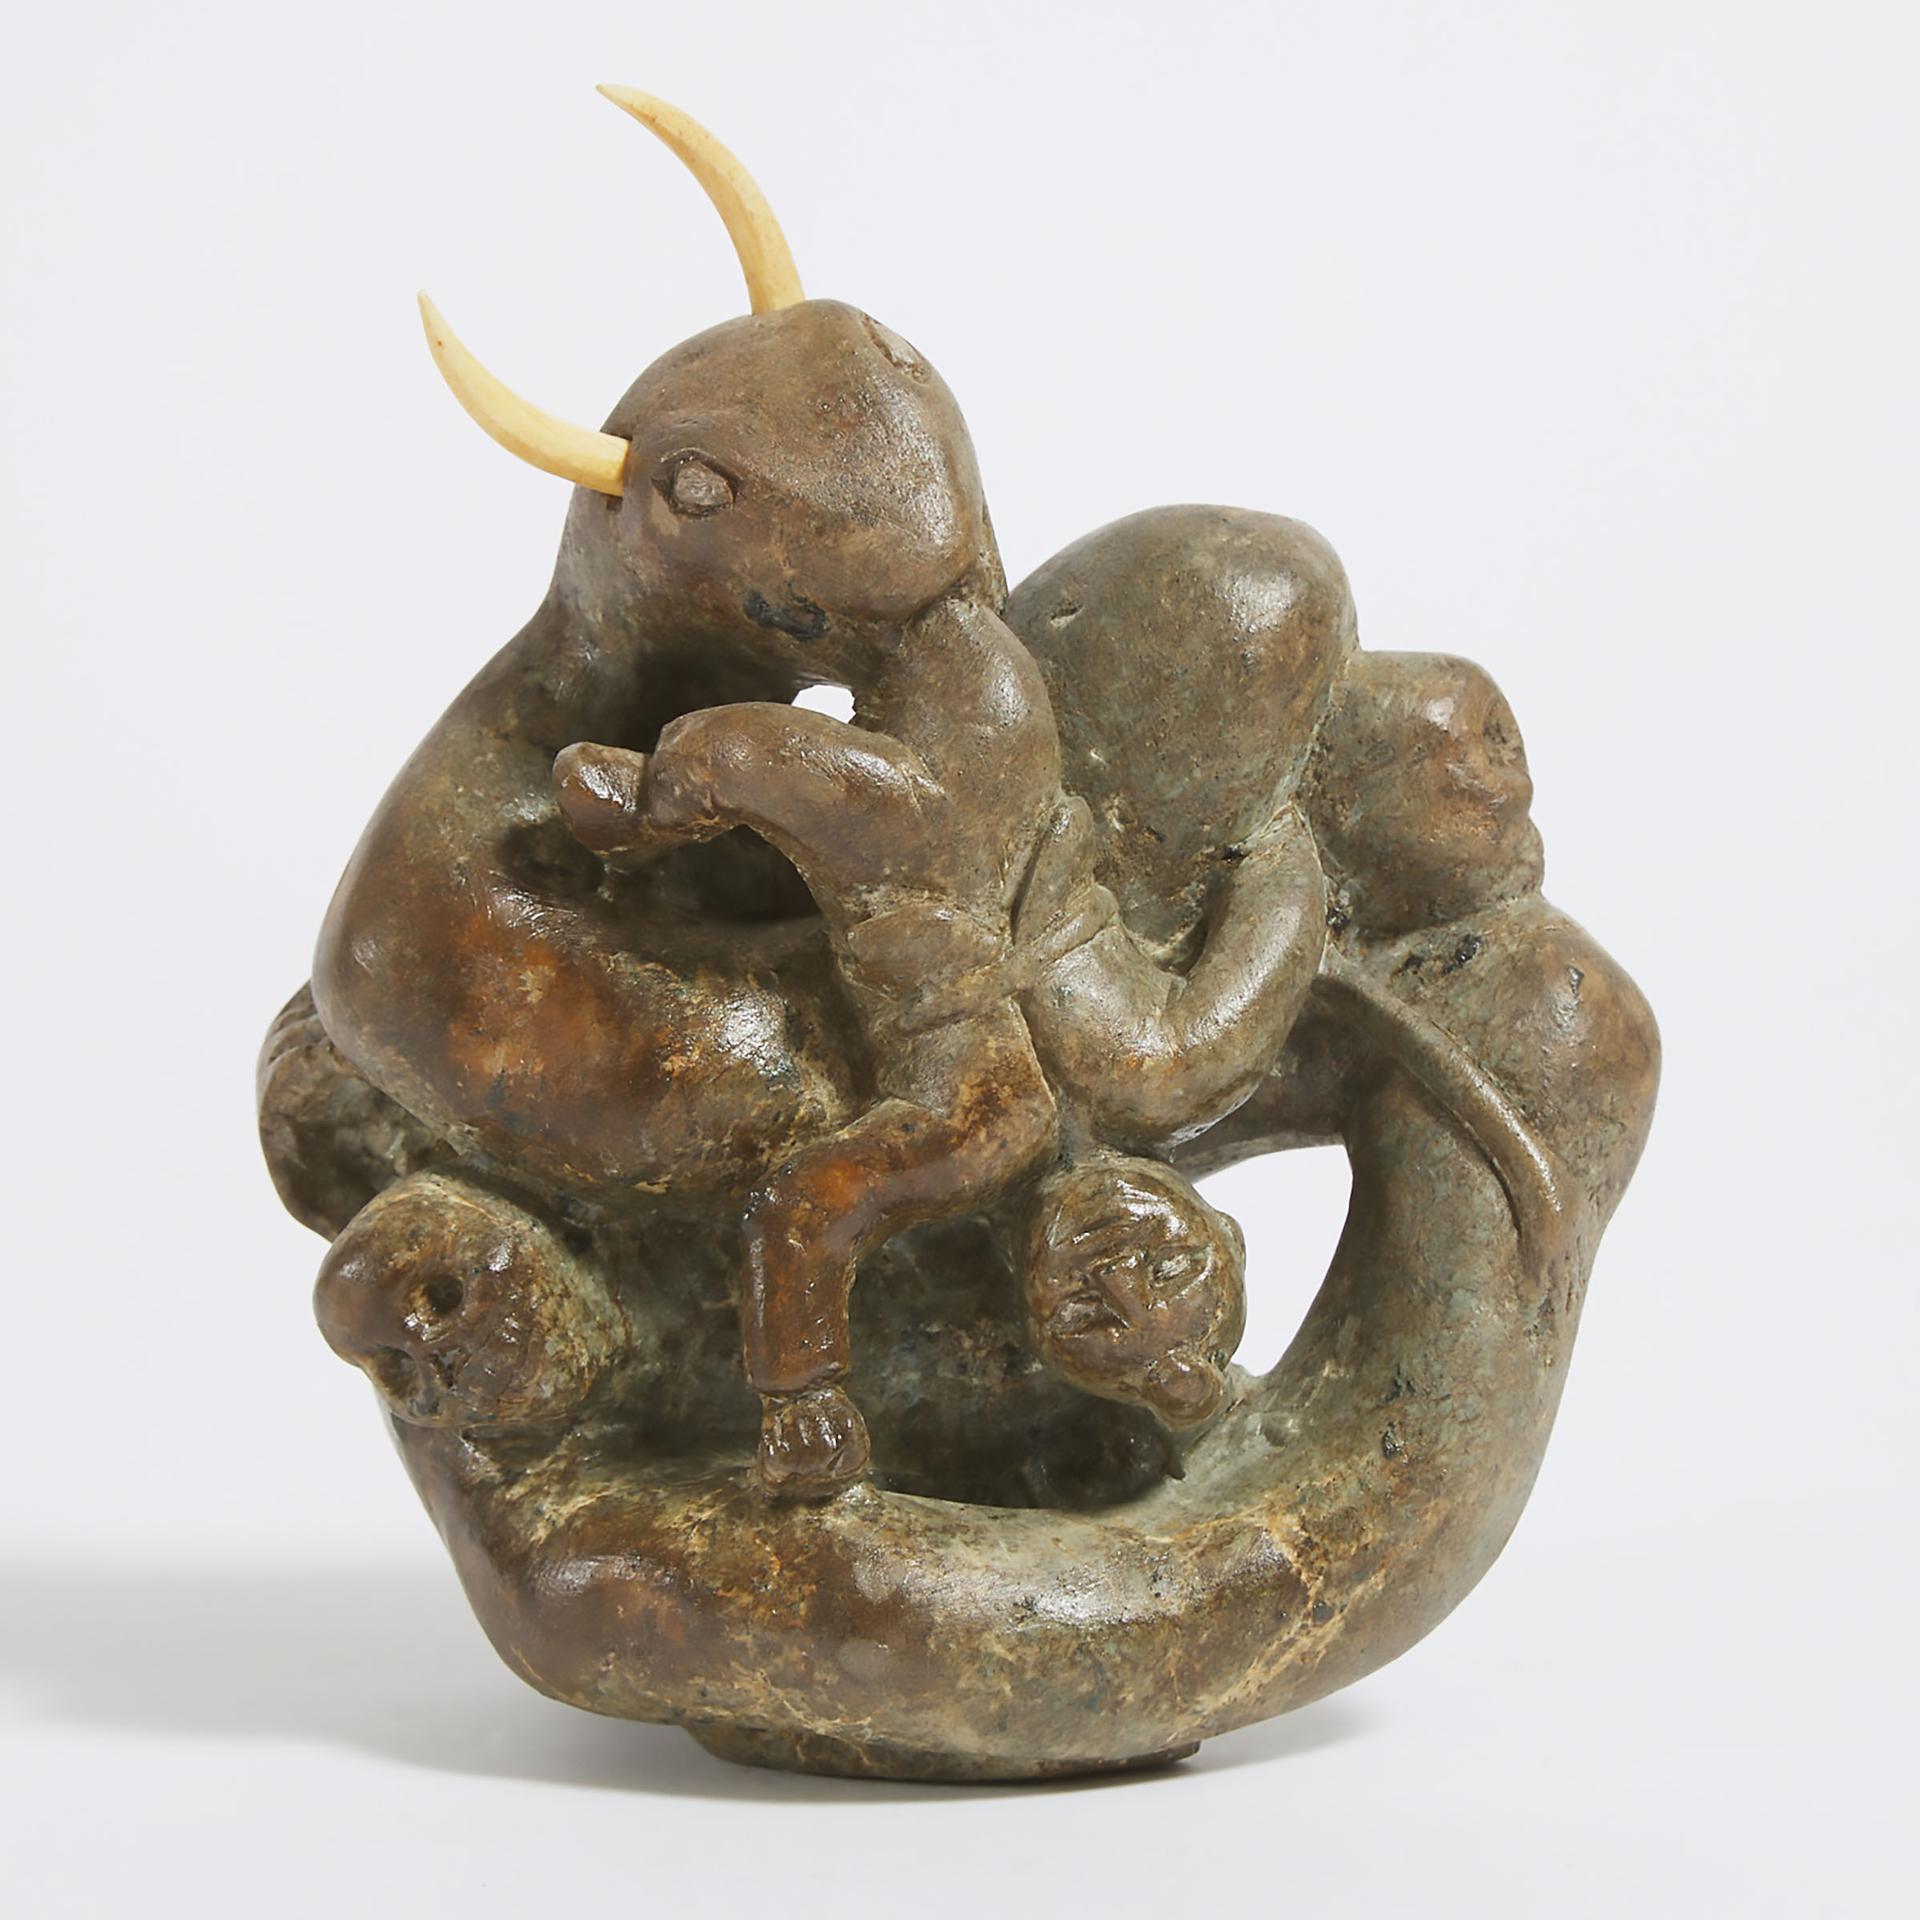 Hoya NĀtŌn - The Horned Serpent